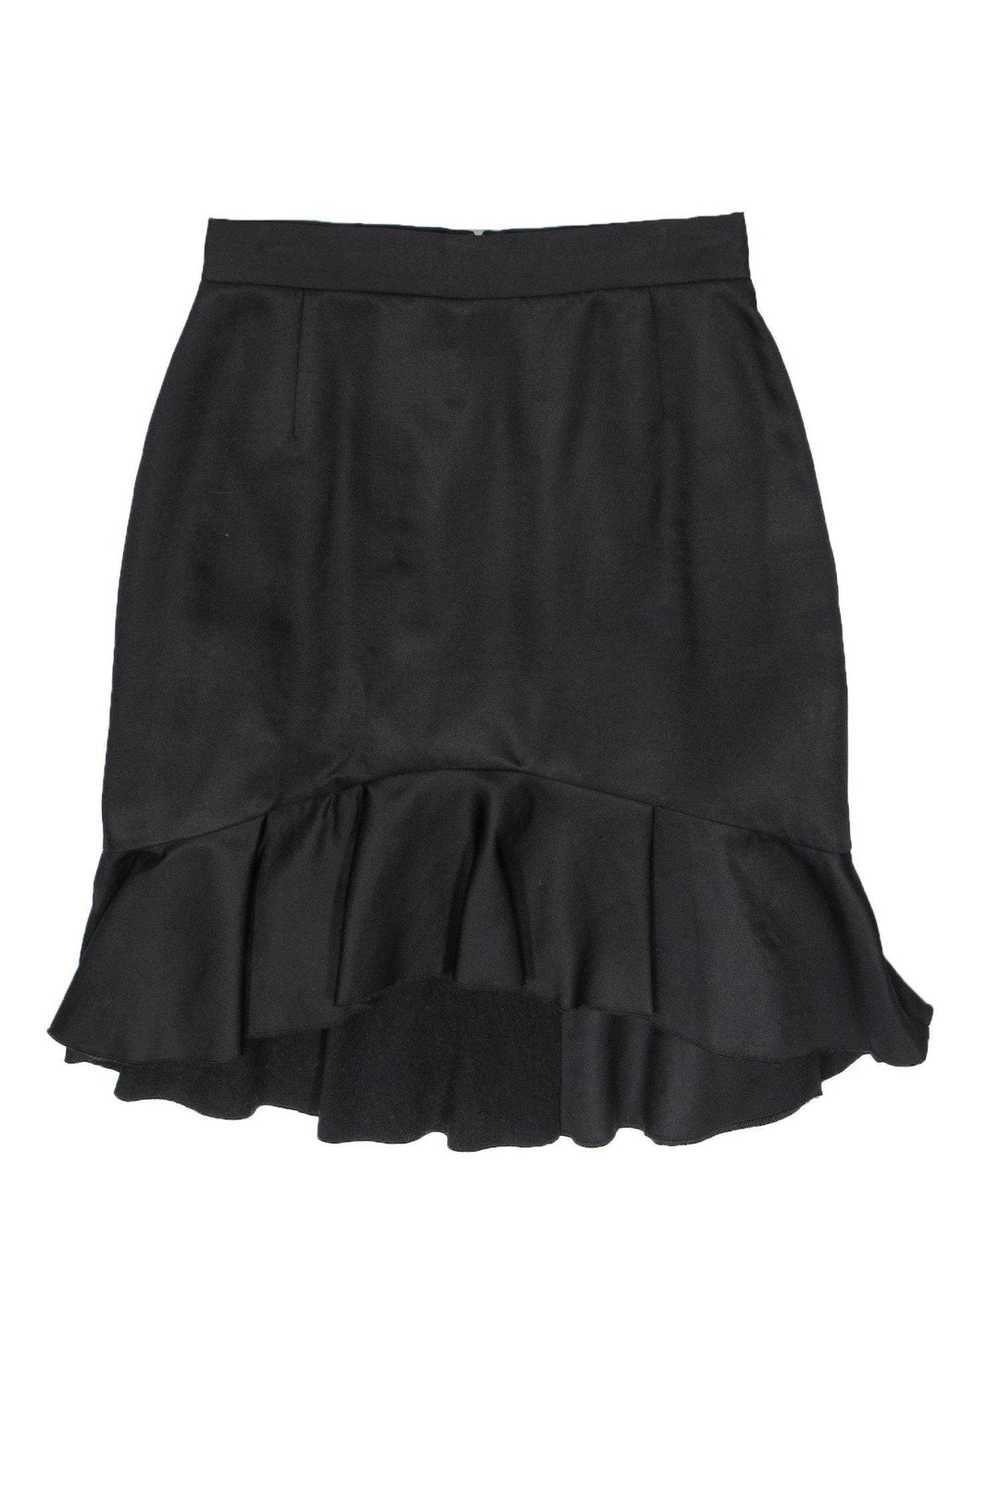 Prada - Black Flounce Wool & Silk Skirt Sz 8 - image 2